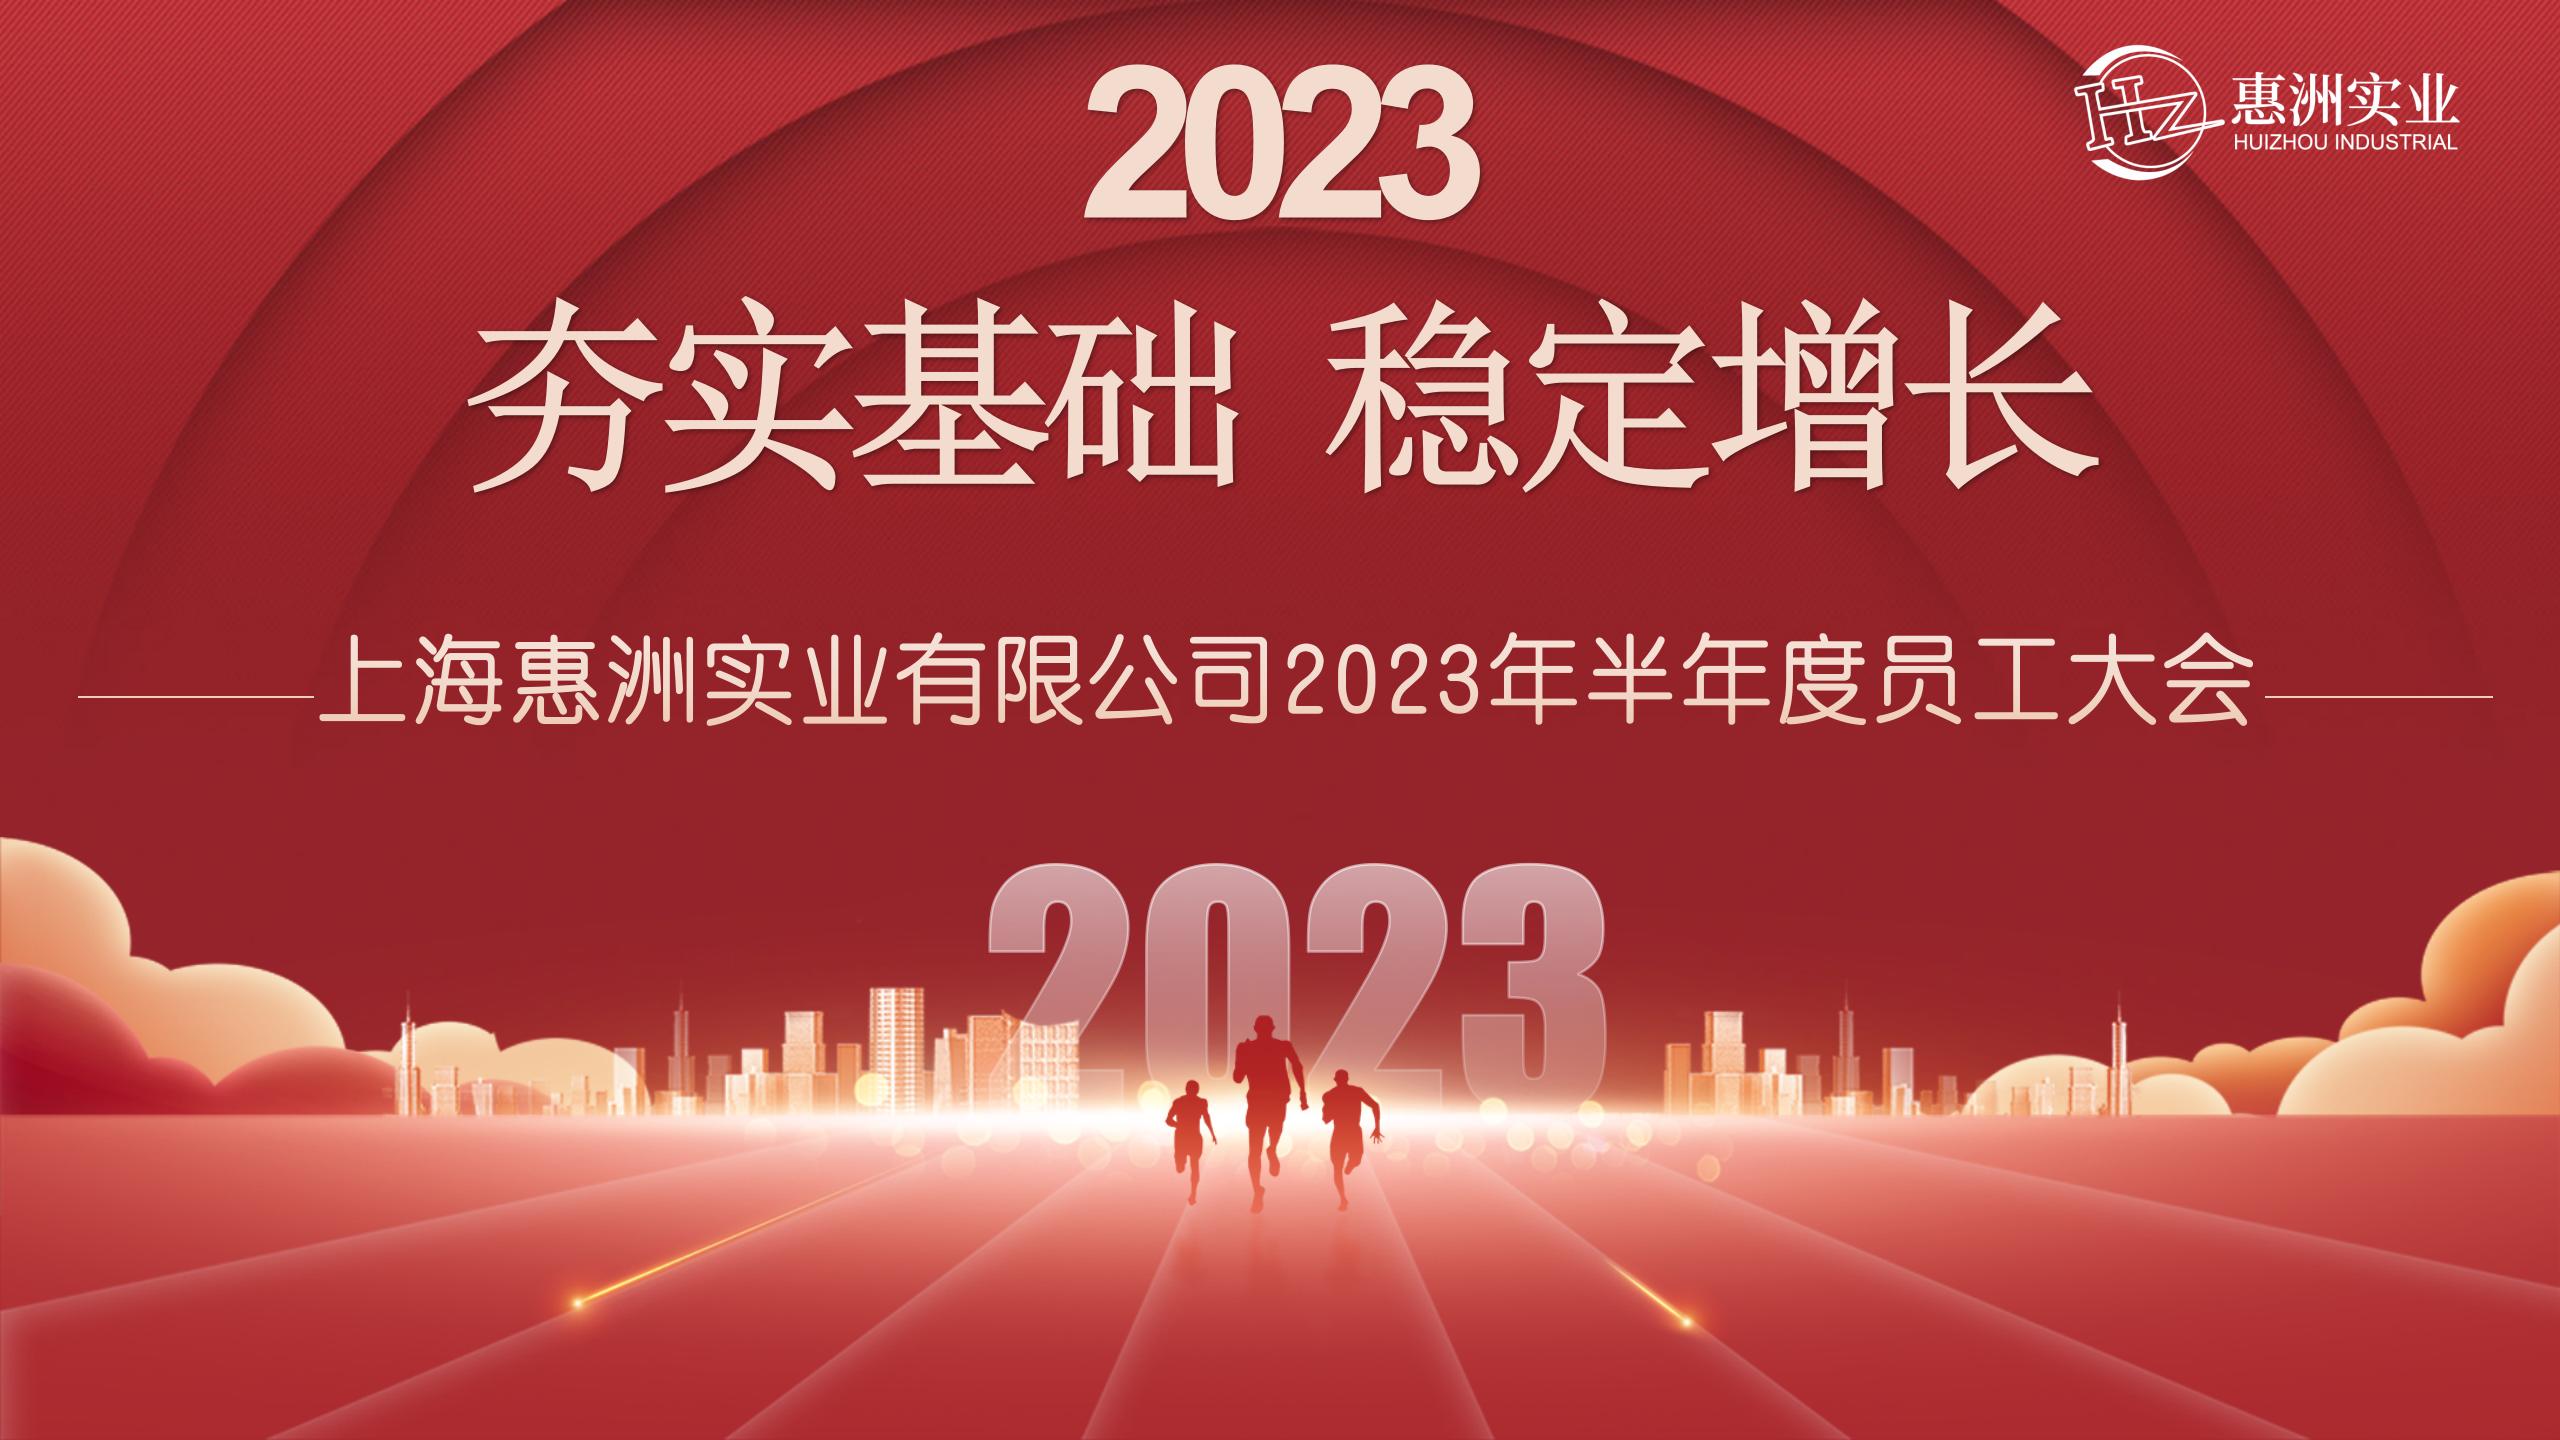 Huizhou Semi-annual Staff Meeting 2023 |